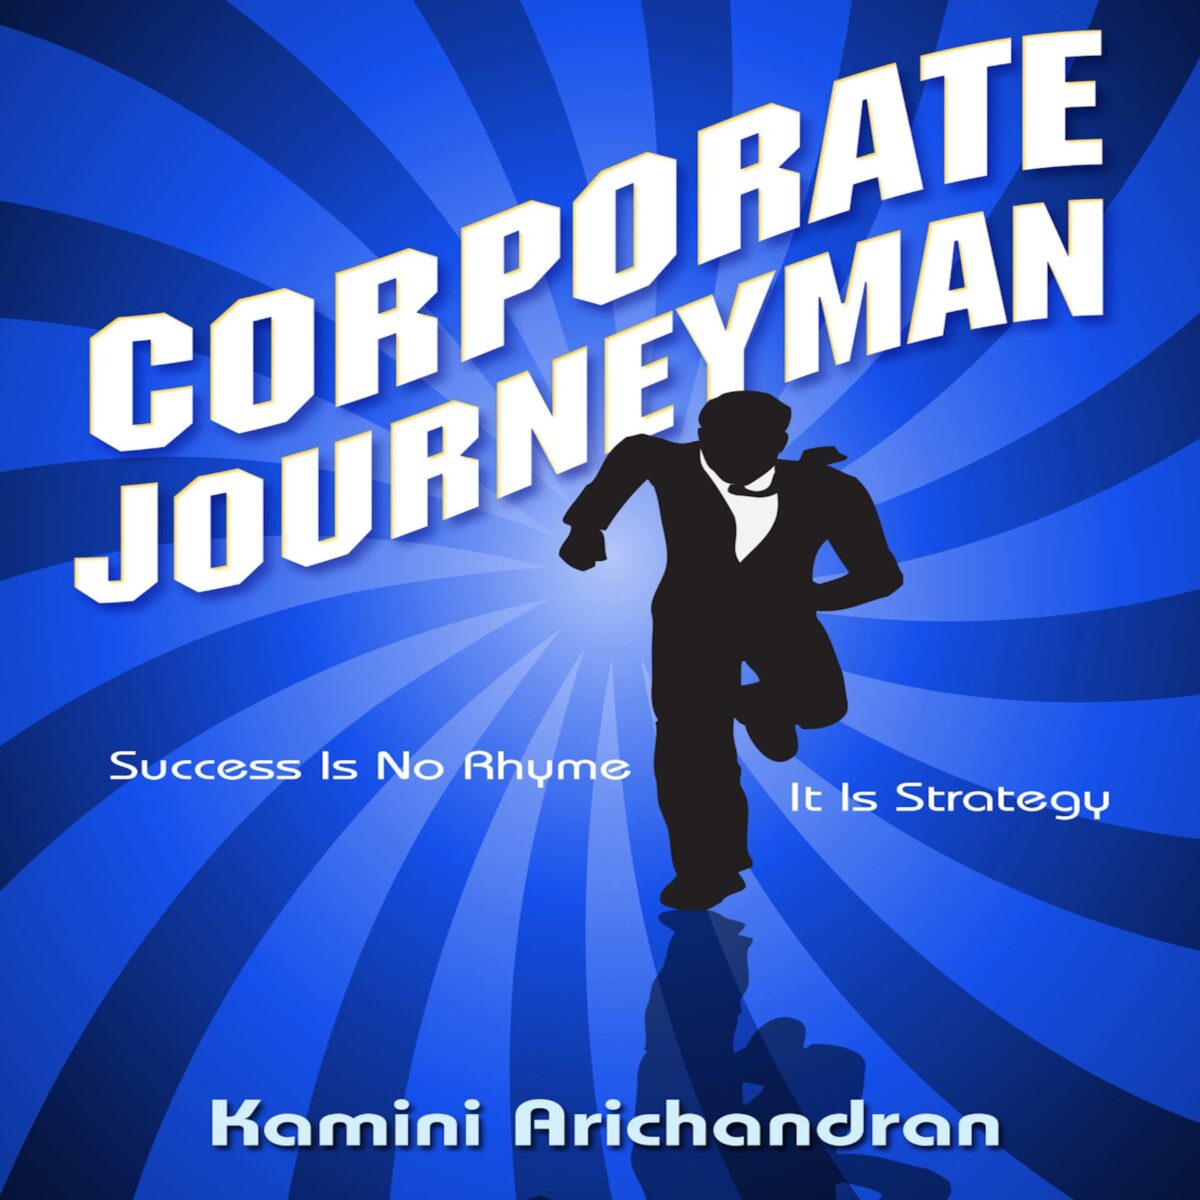 Corporate Journeyman